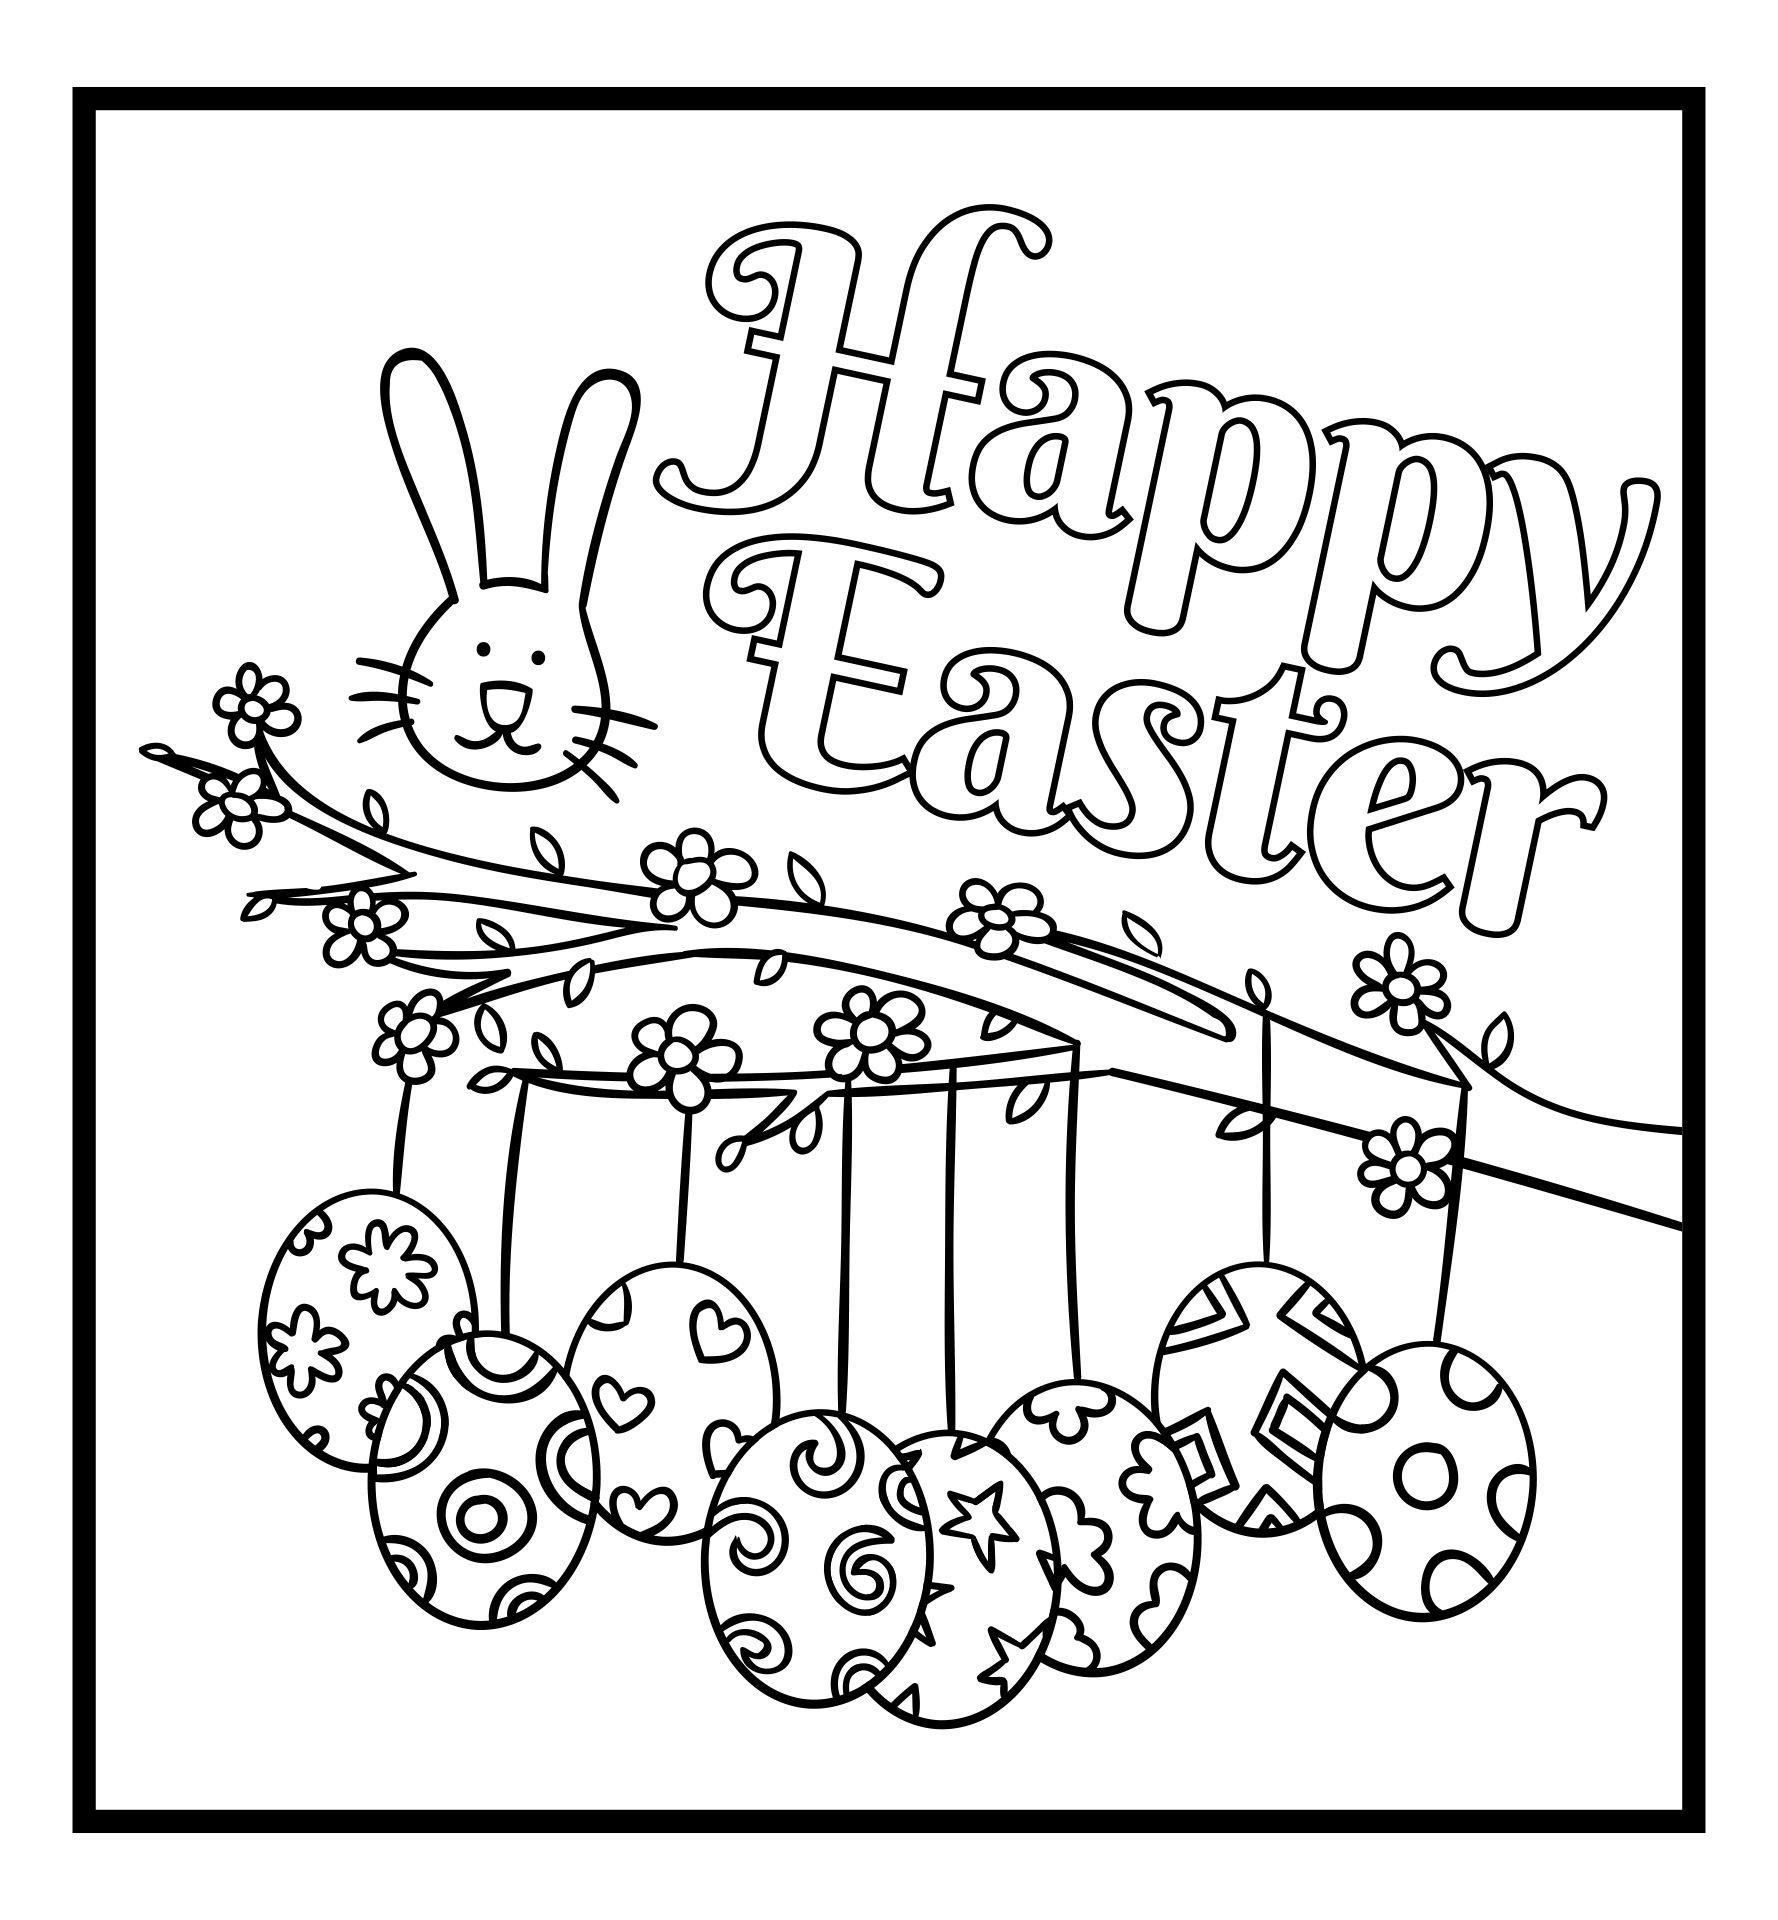 Printable Easter Cards Kids